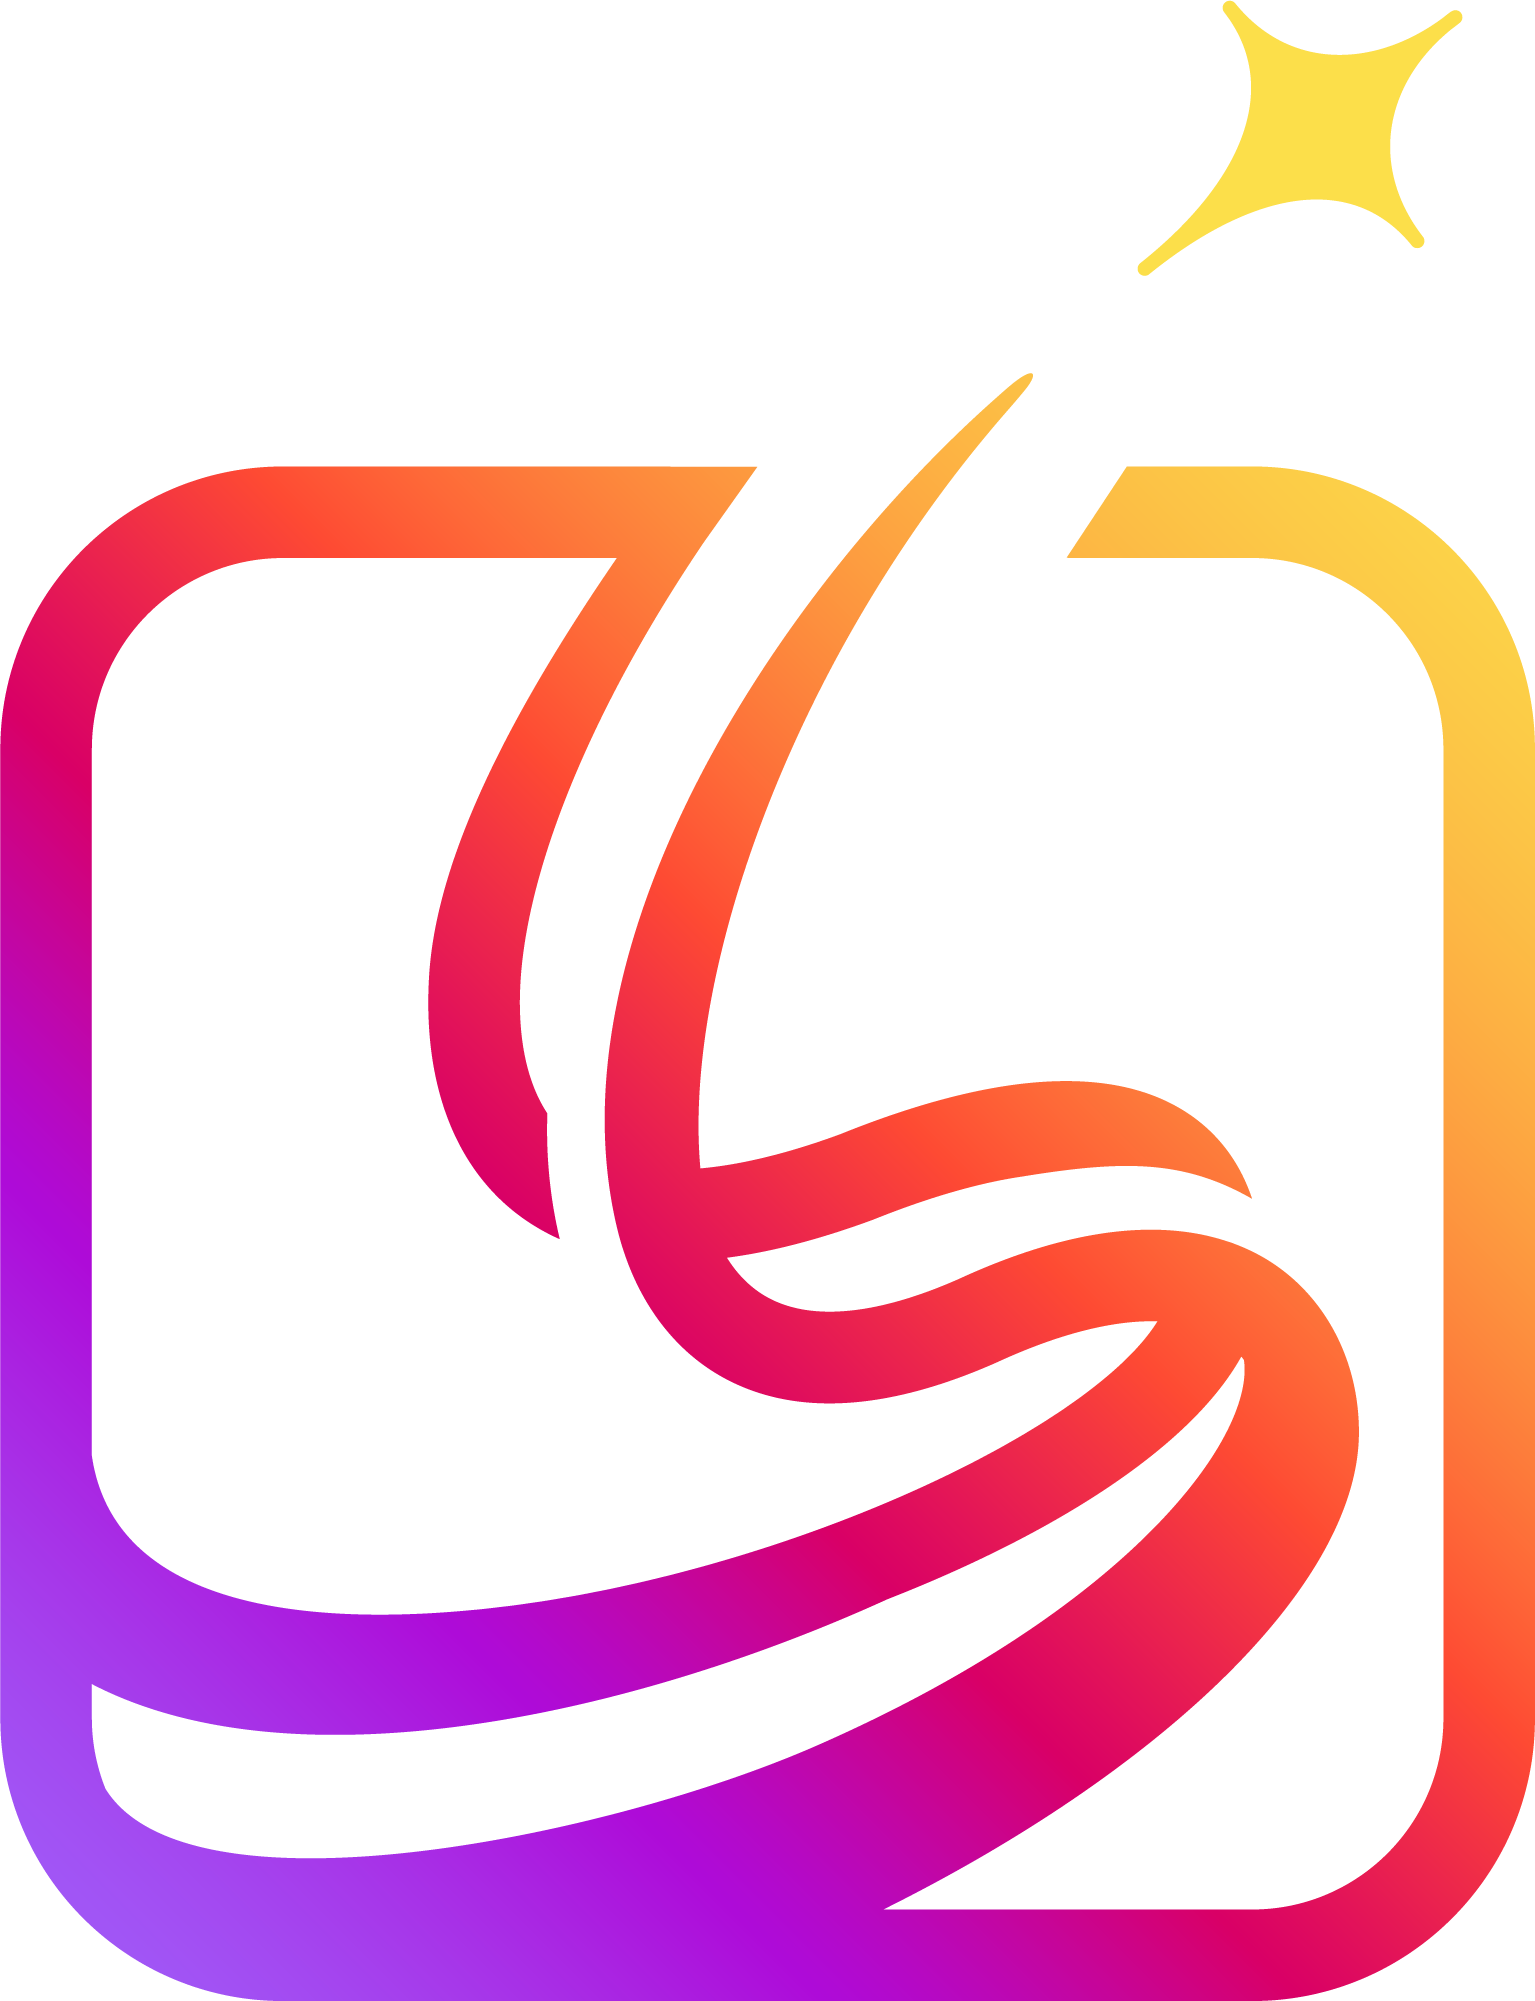 sparkbox logo